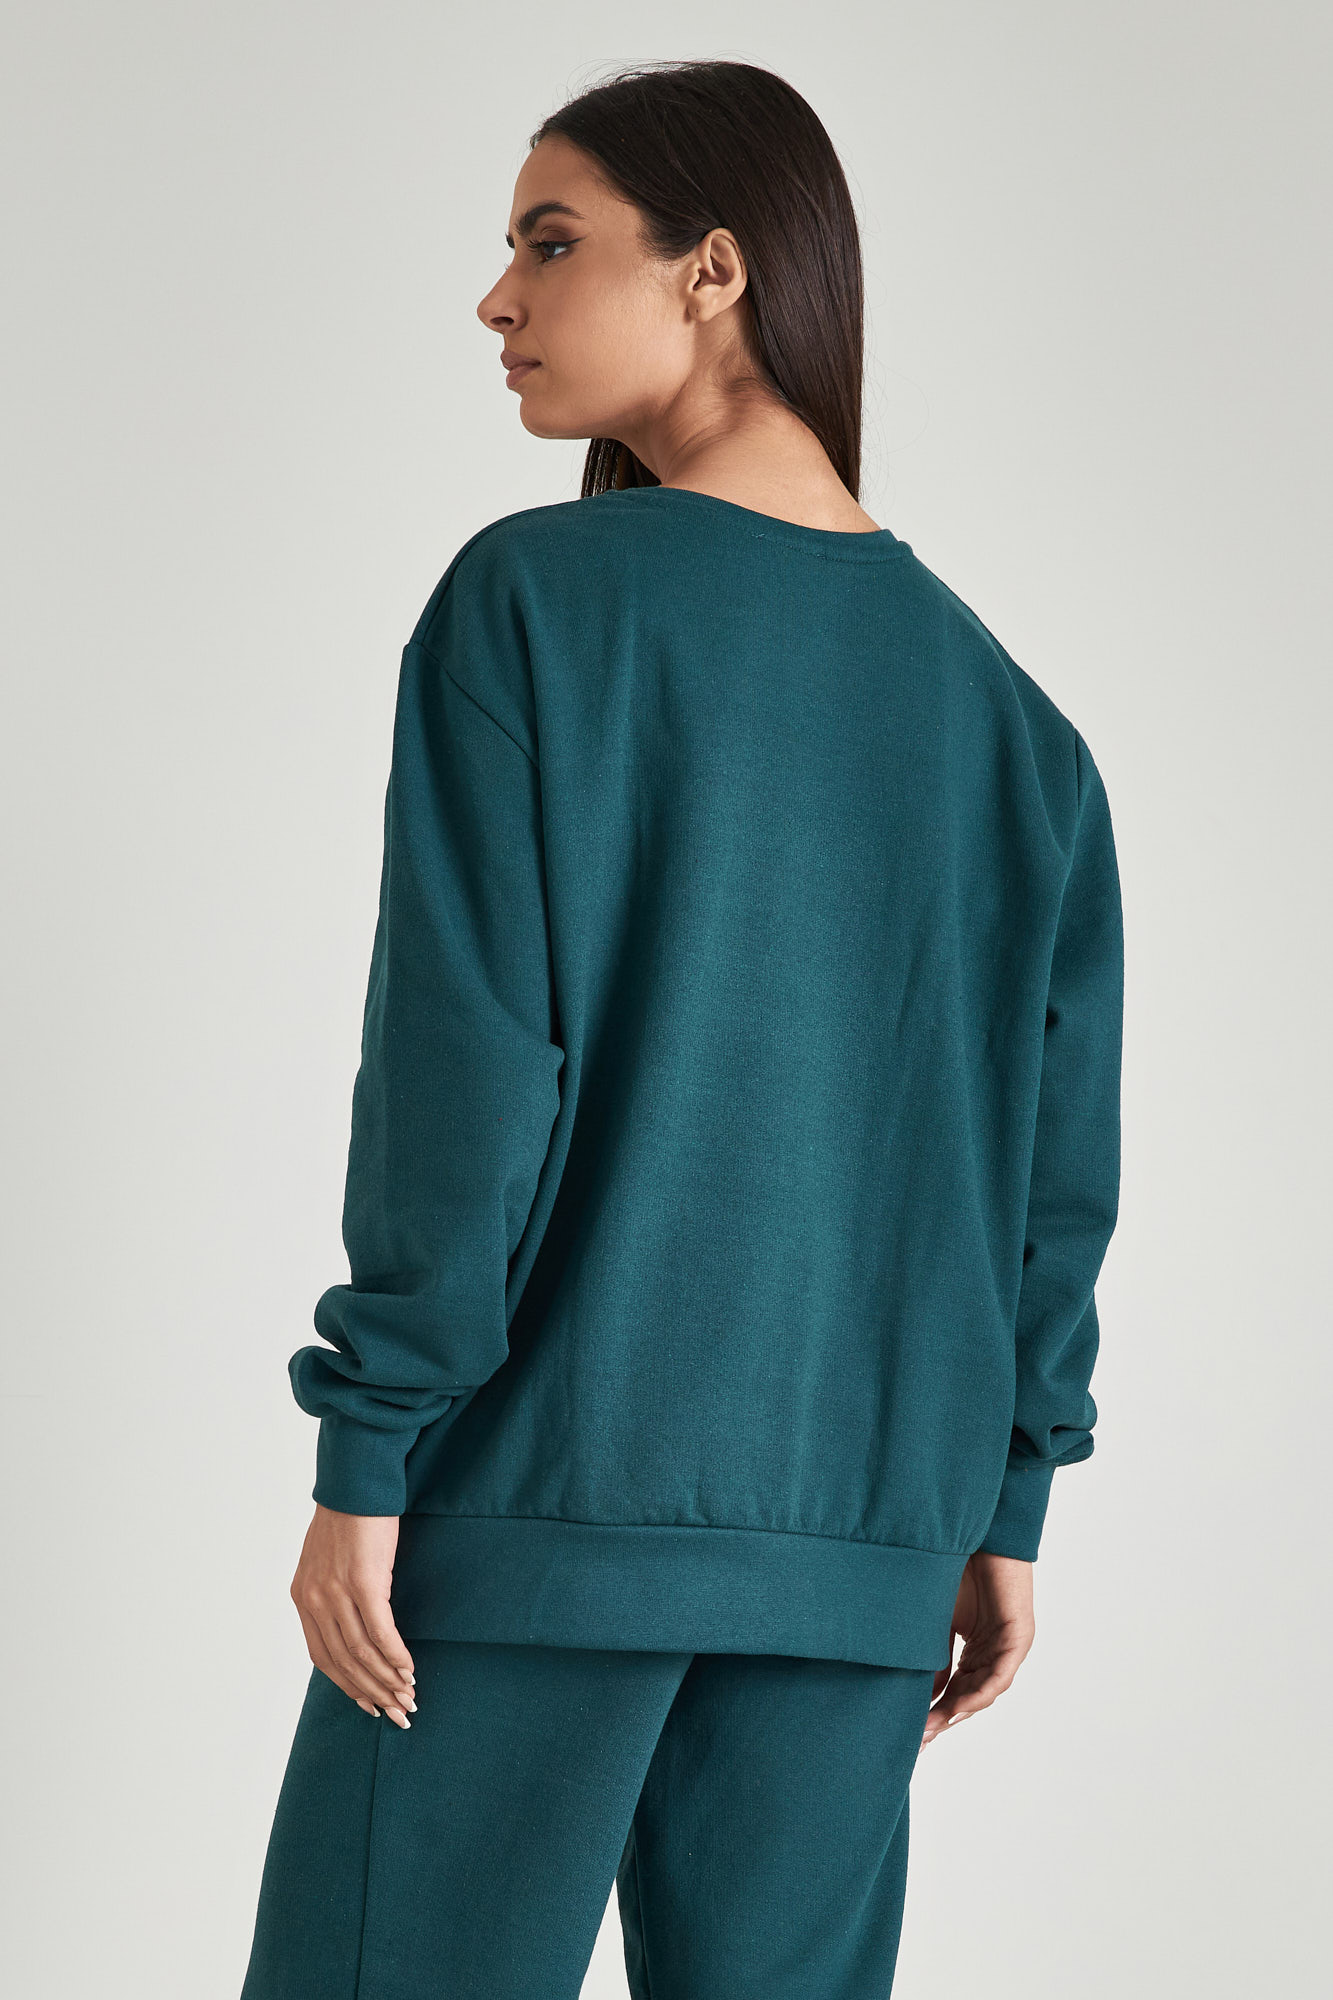 Picture of College sweatshirt unisex oversized